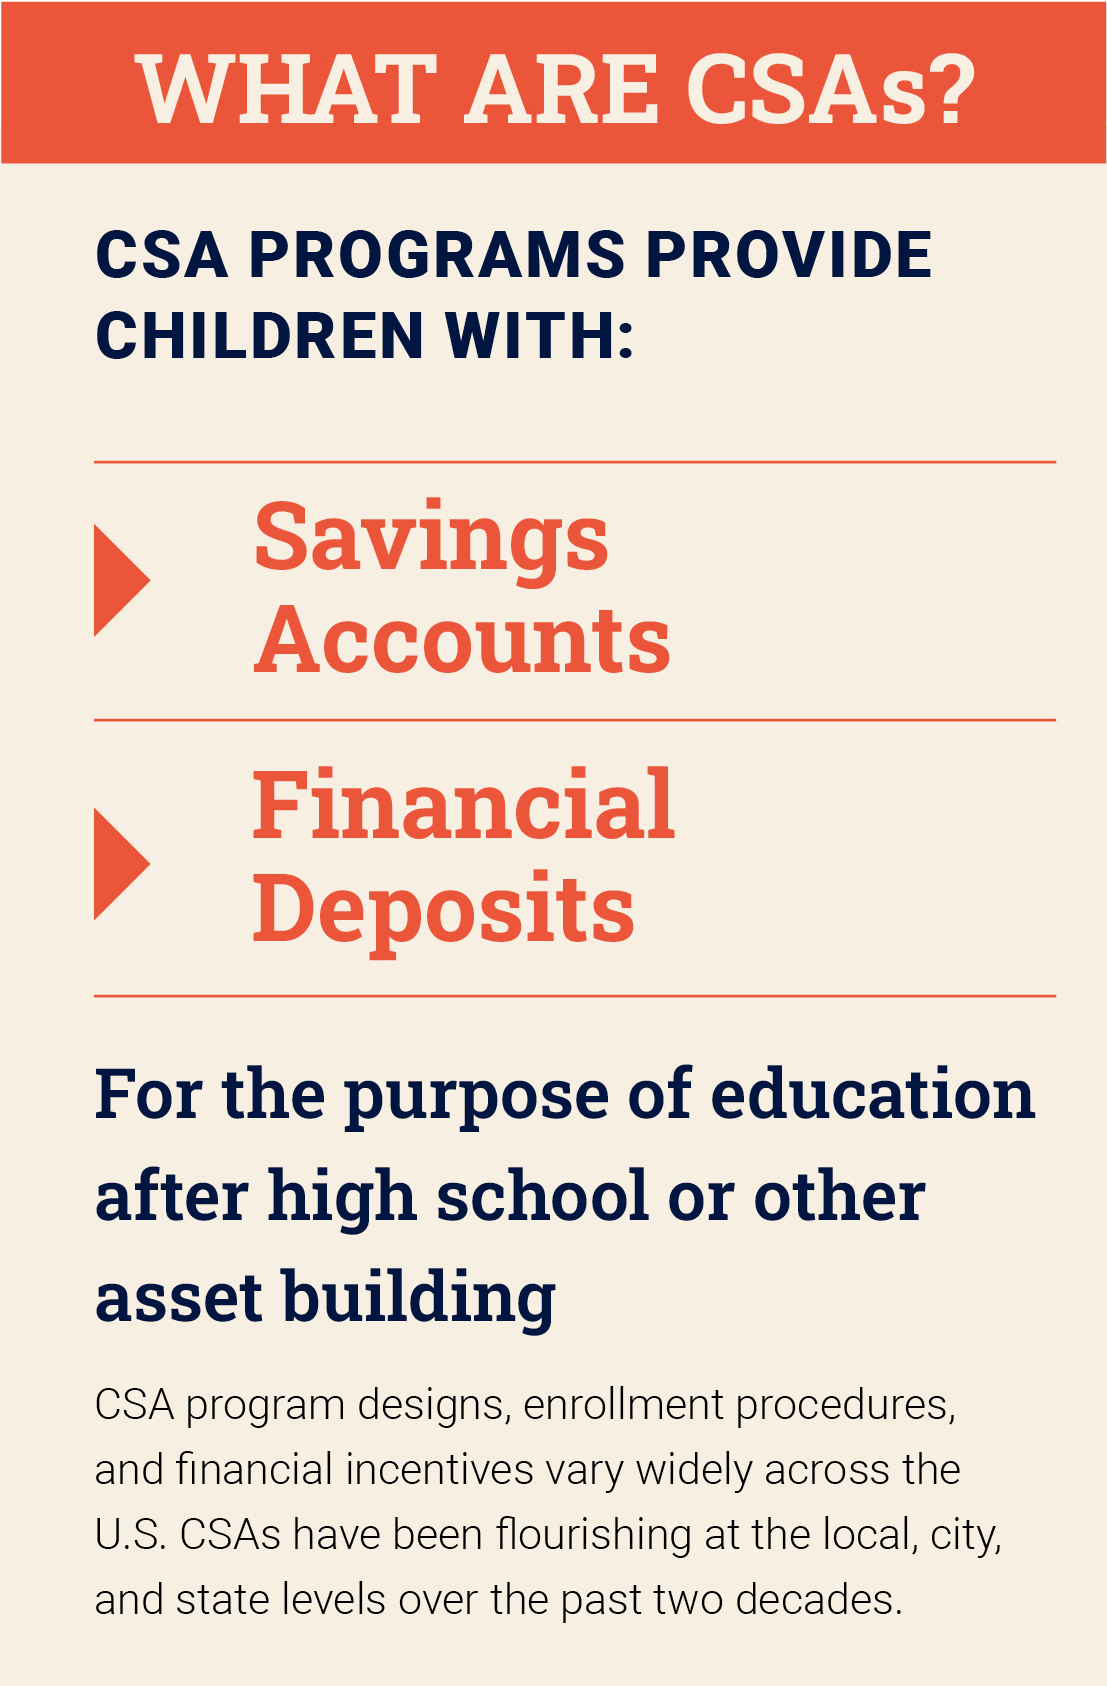 CSA programs provide kids with savings accounts and financial deposits